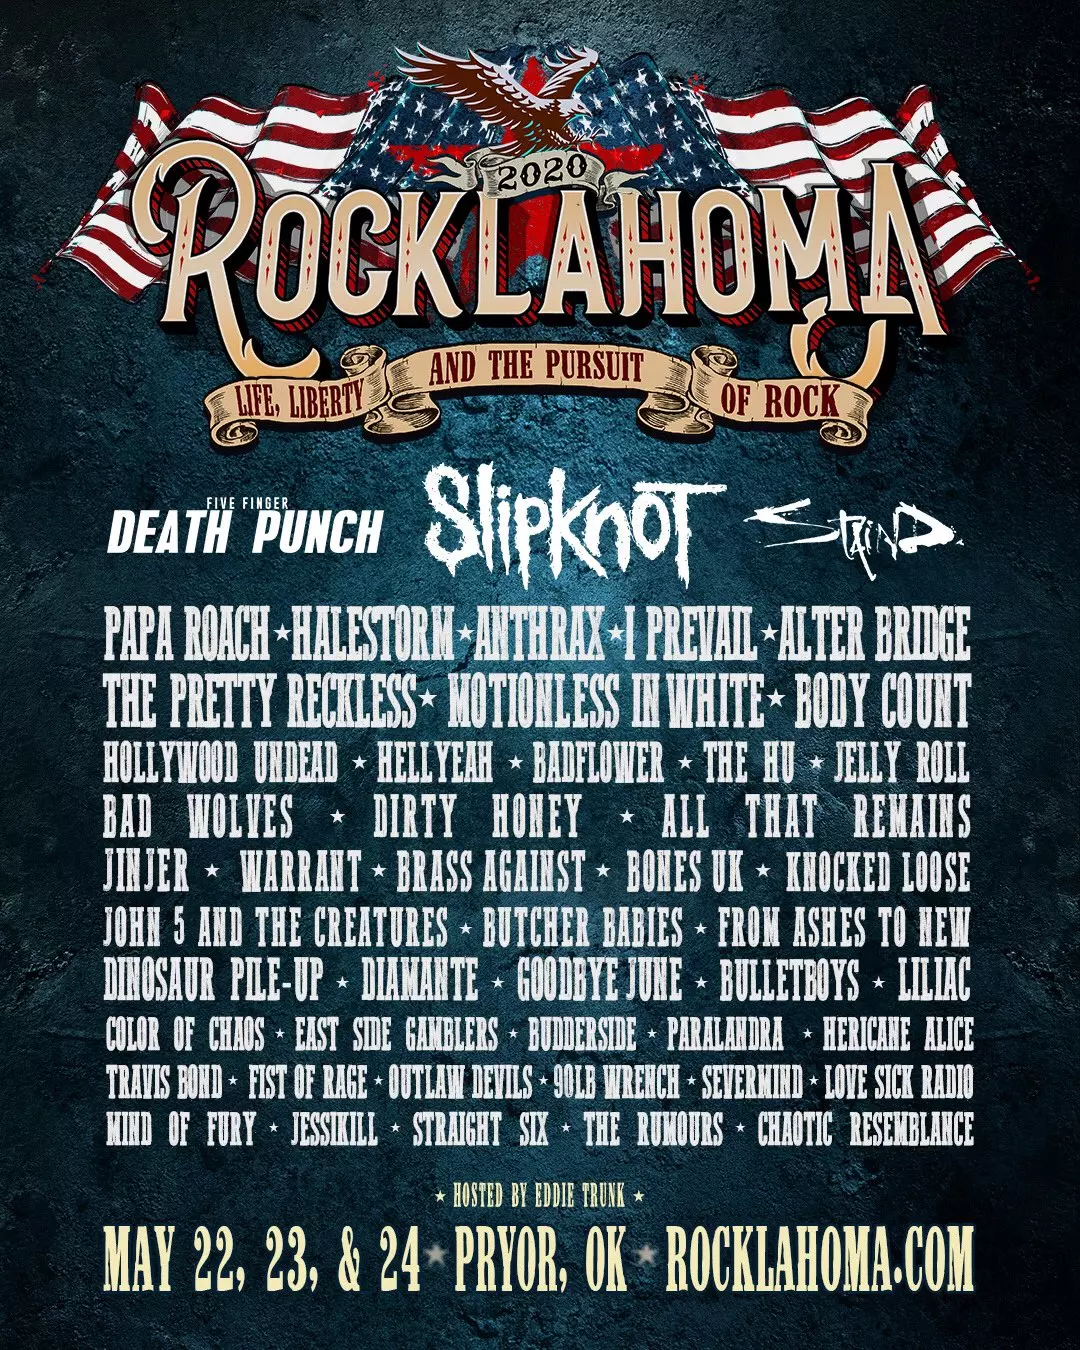 Rocklahoma 2020: Five Finger Death Punch, Slipknot, Staind + More